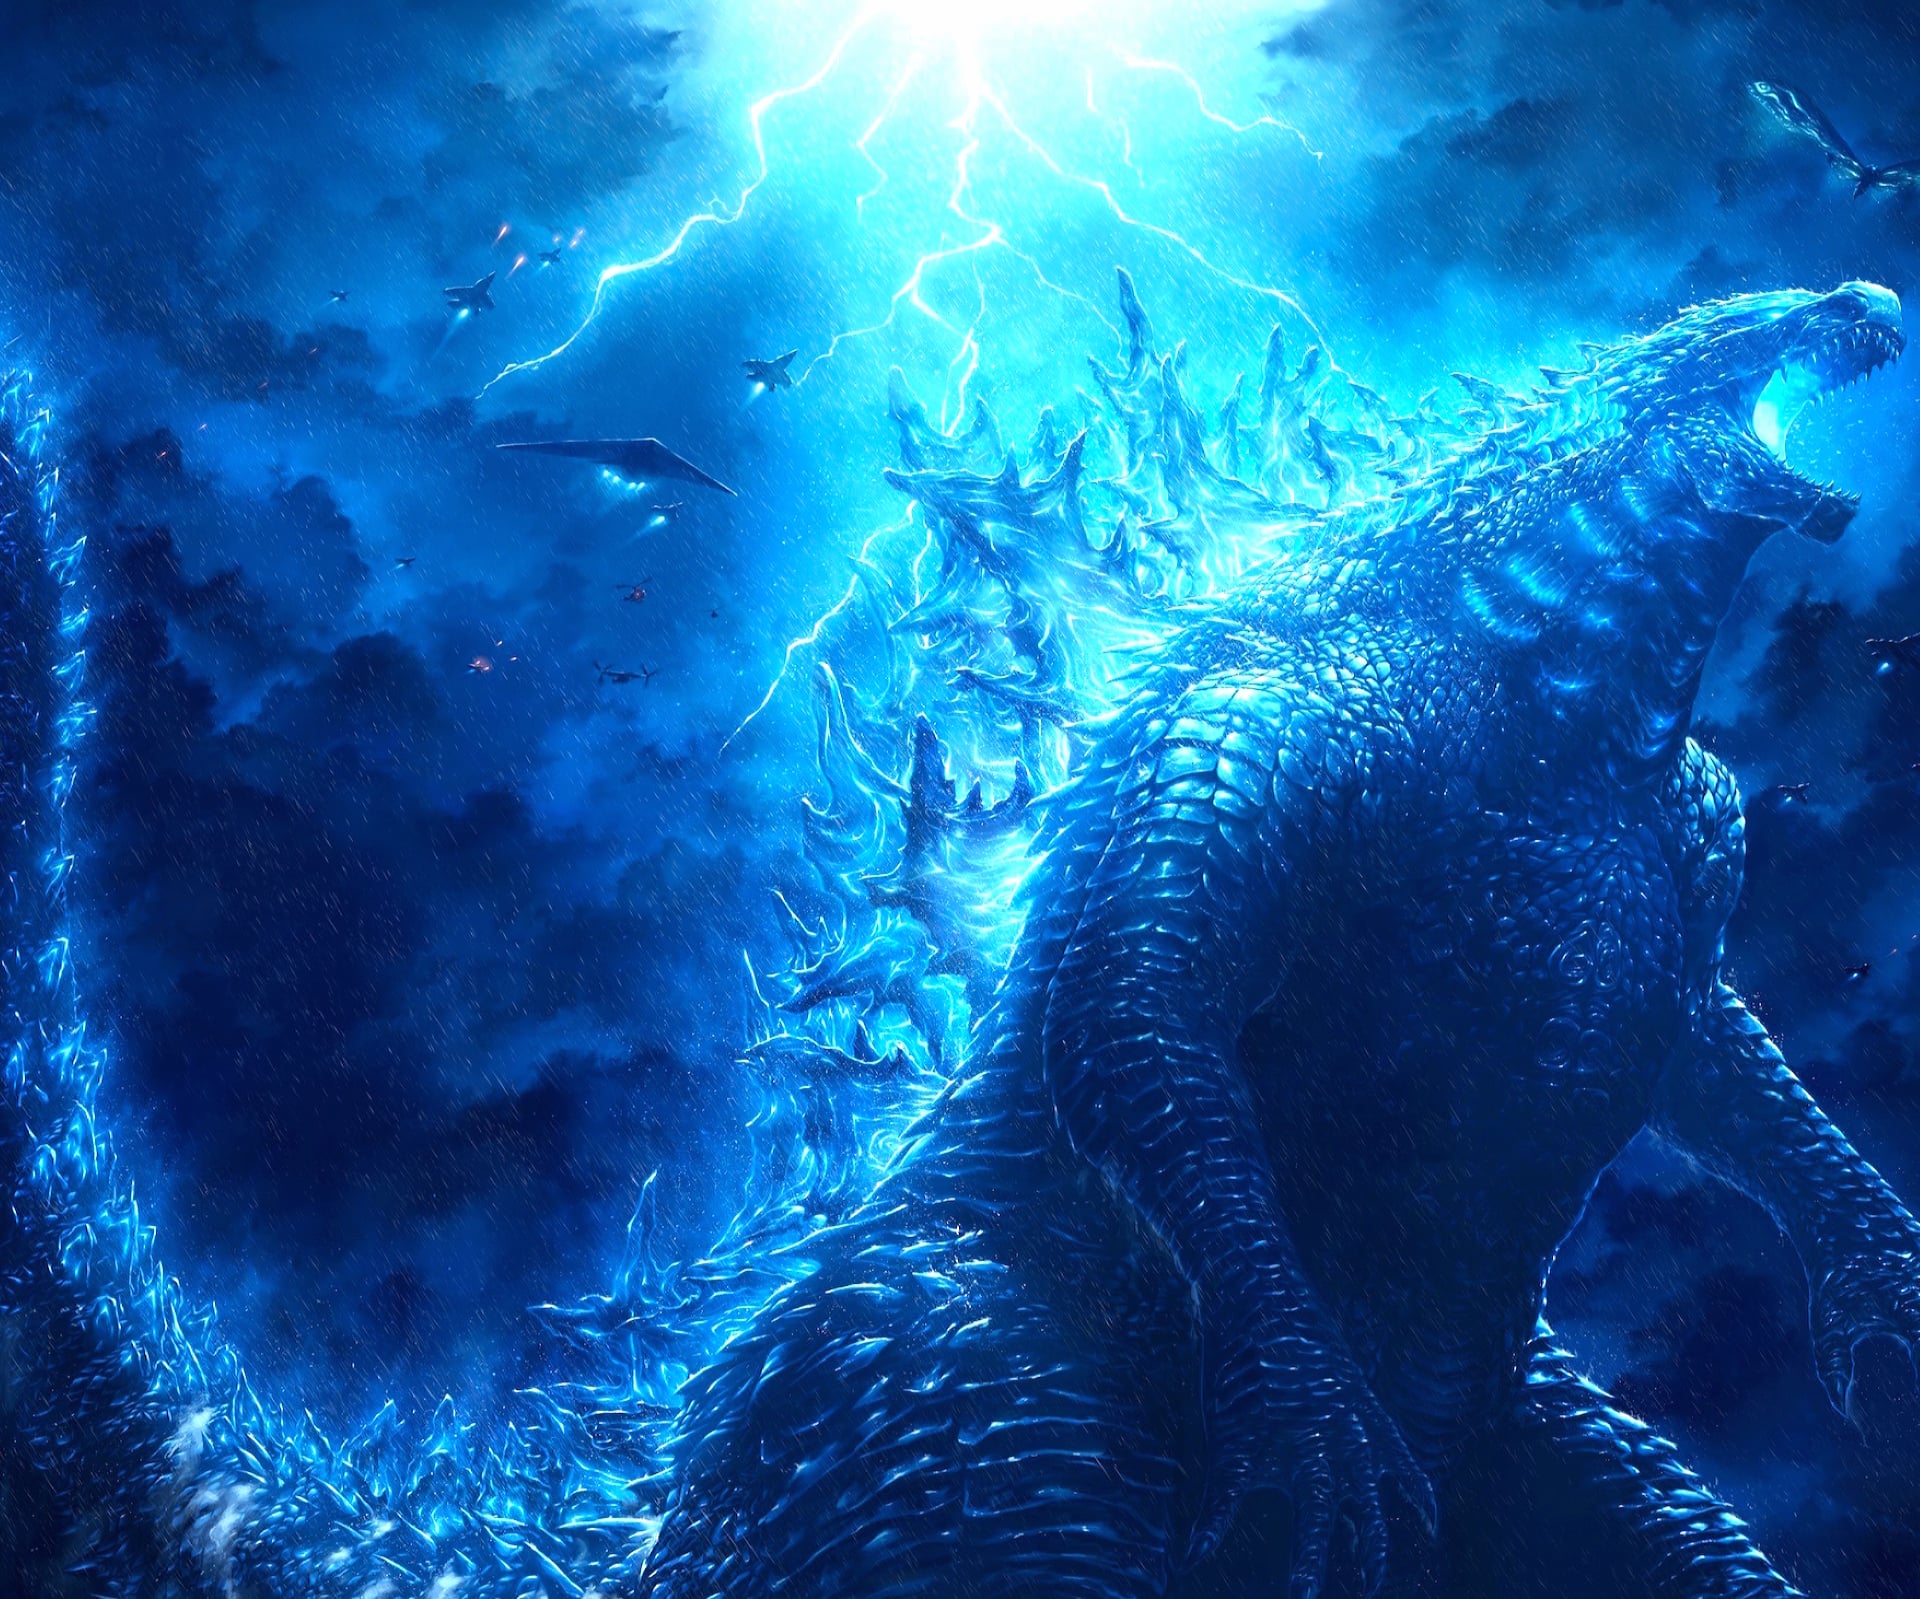 Fantasy Godzilla at 1280 x 960 size wallpapers HD quality